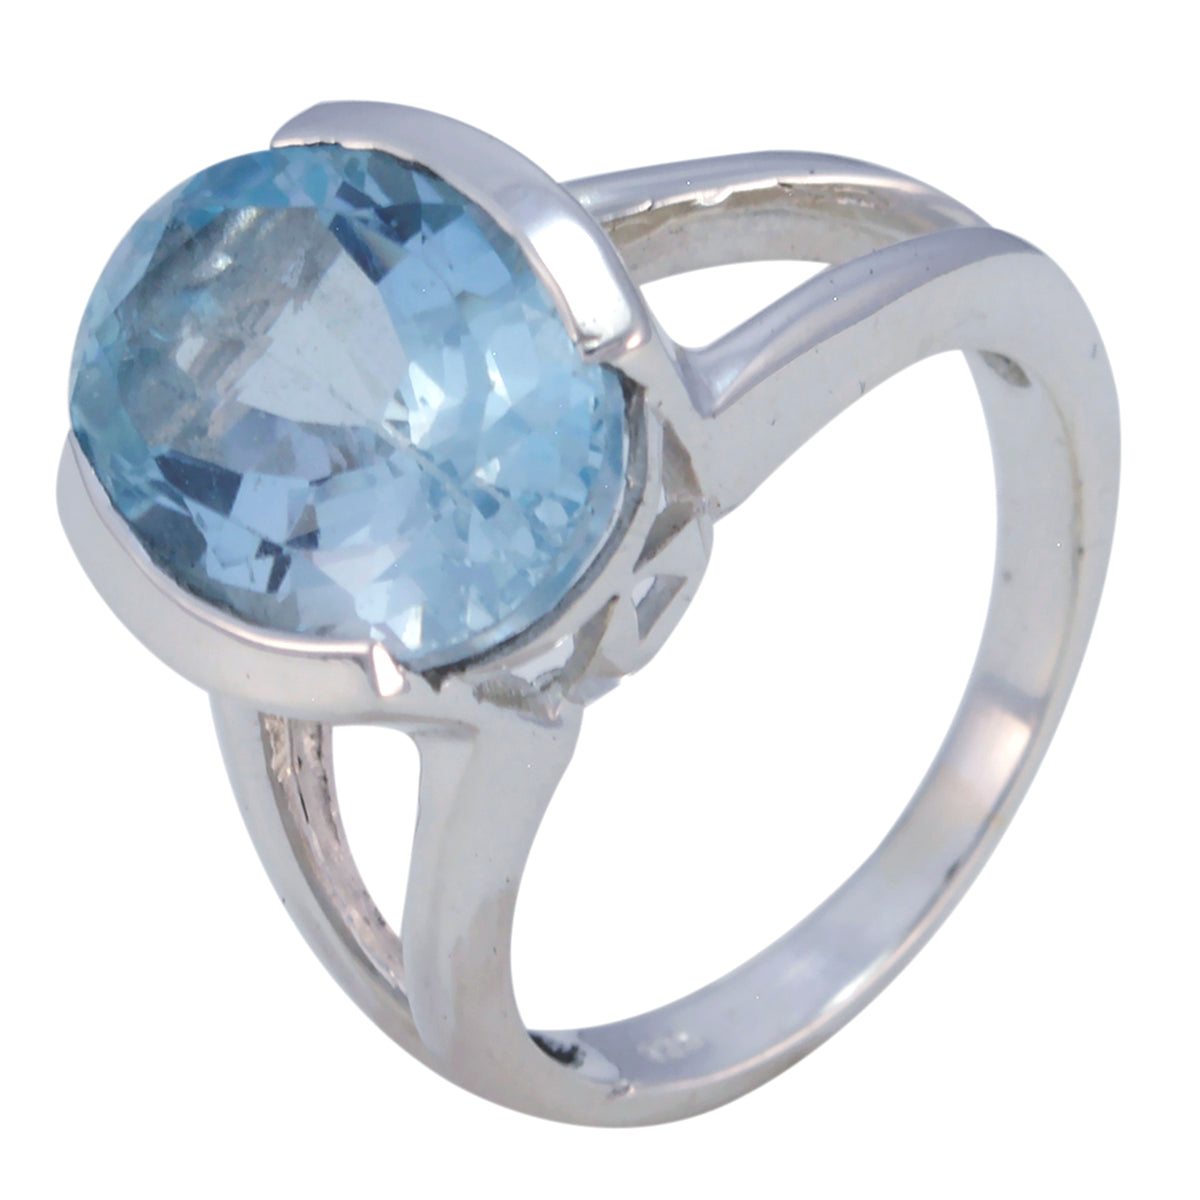 Riyo Classy Gem Blue Topaz 925 Silver Ring Jewelry Magnifying Glass